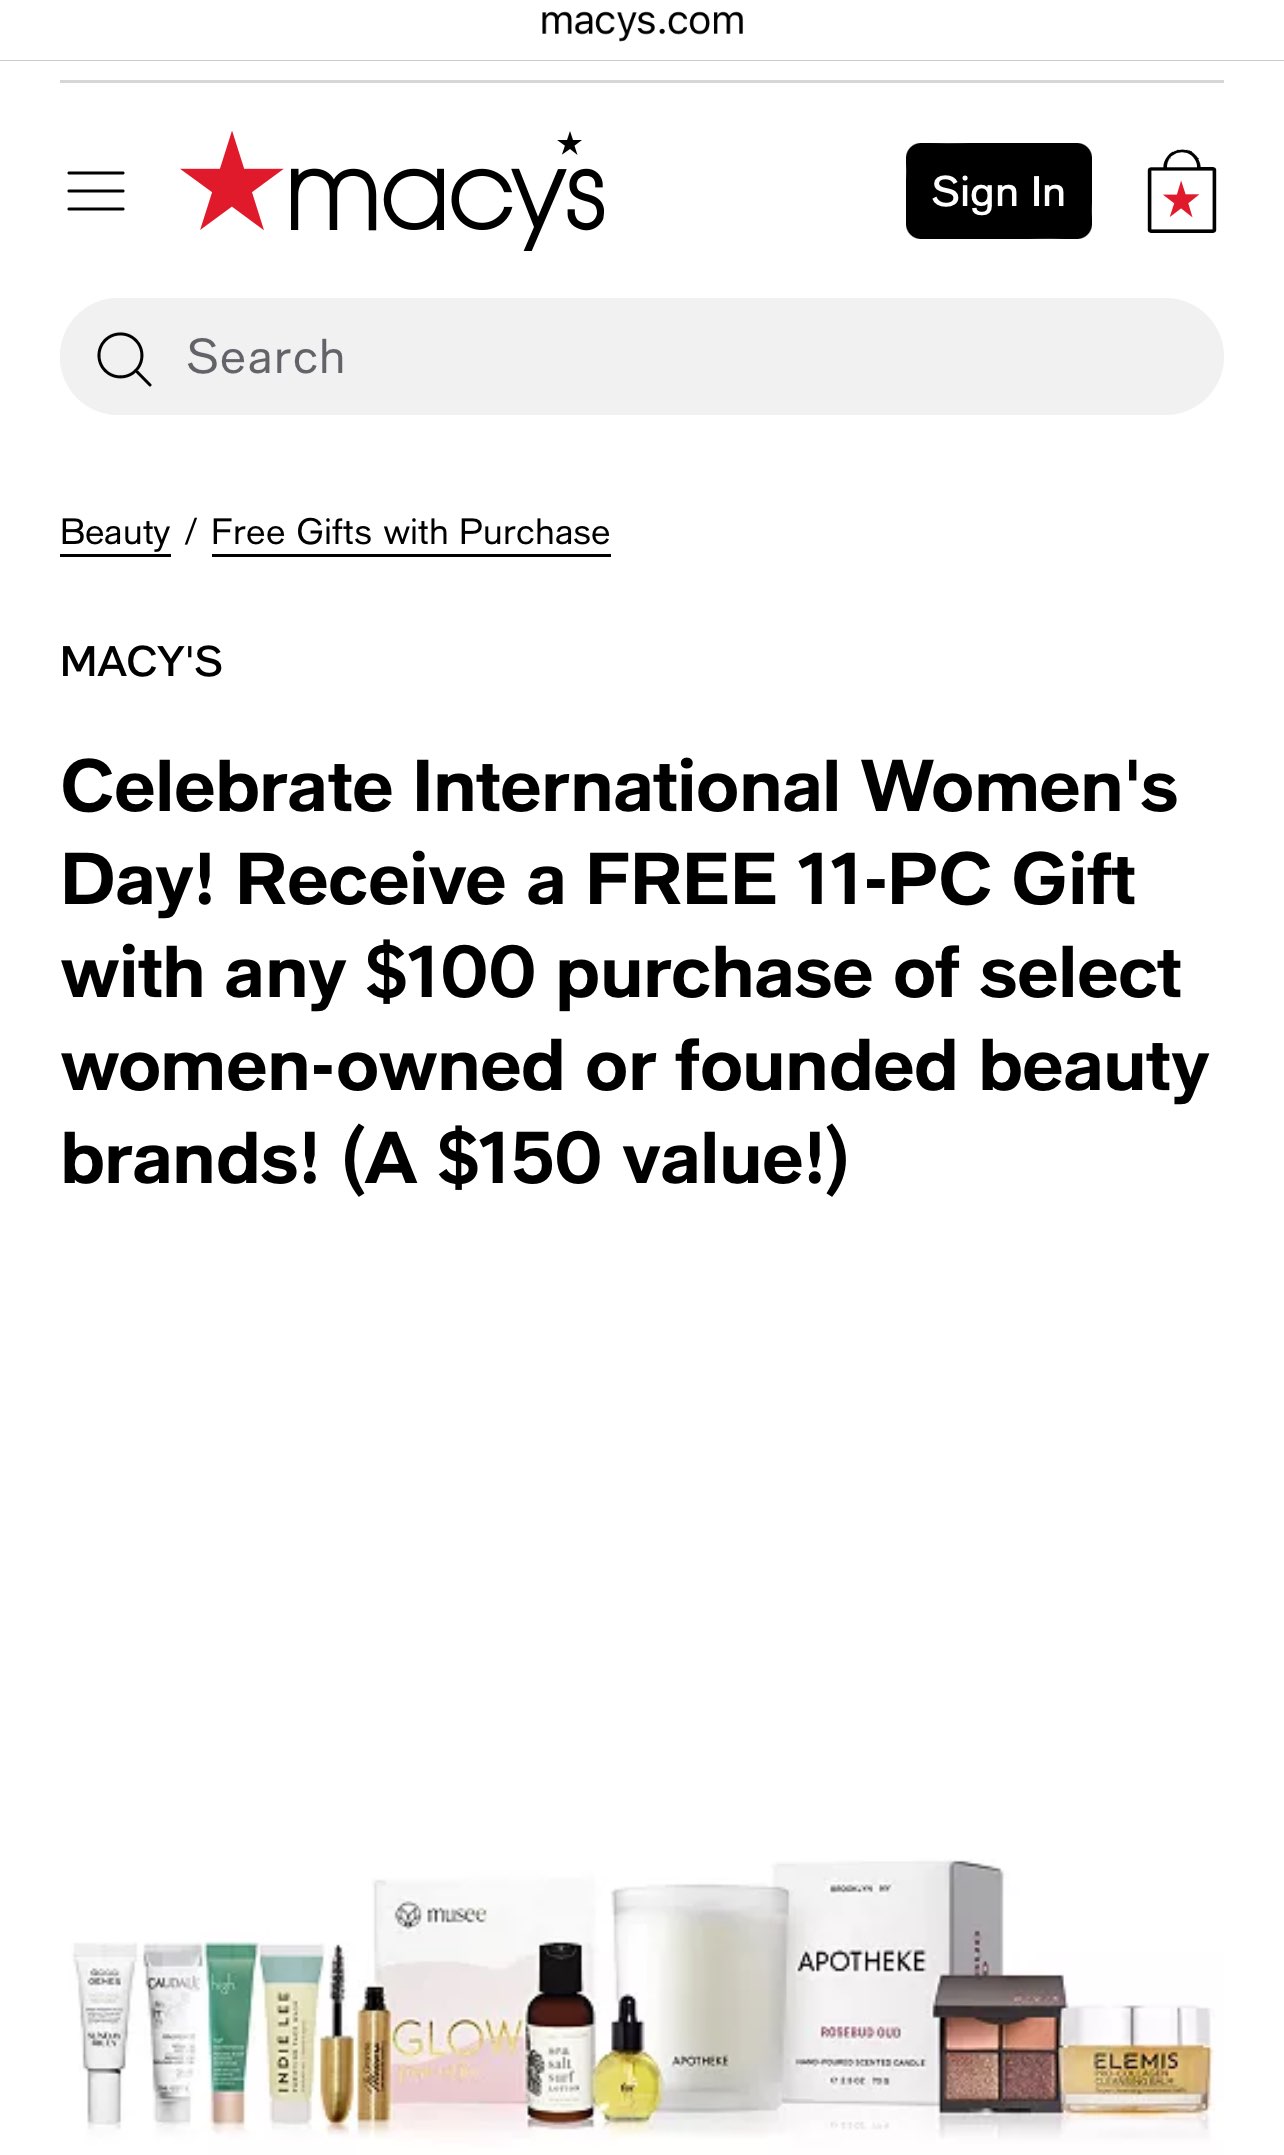 customer loyalty program for women's day